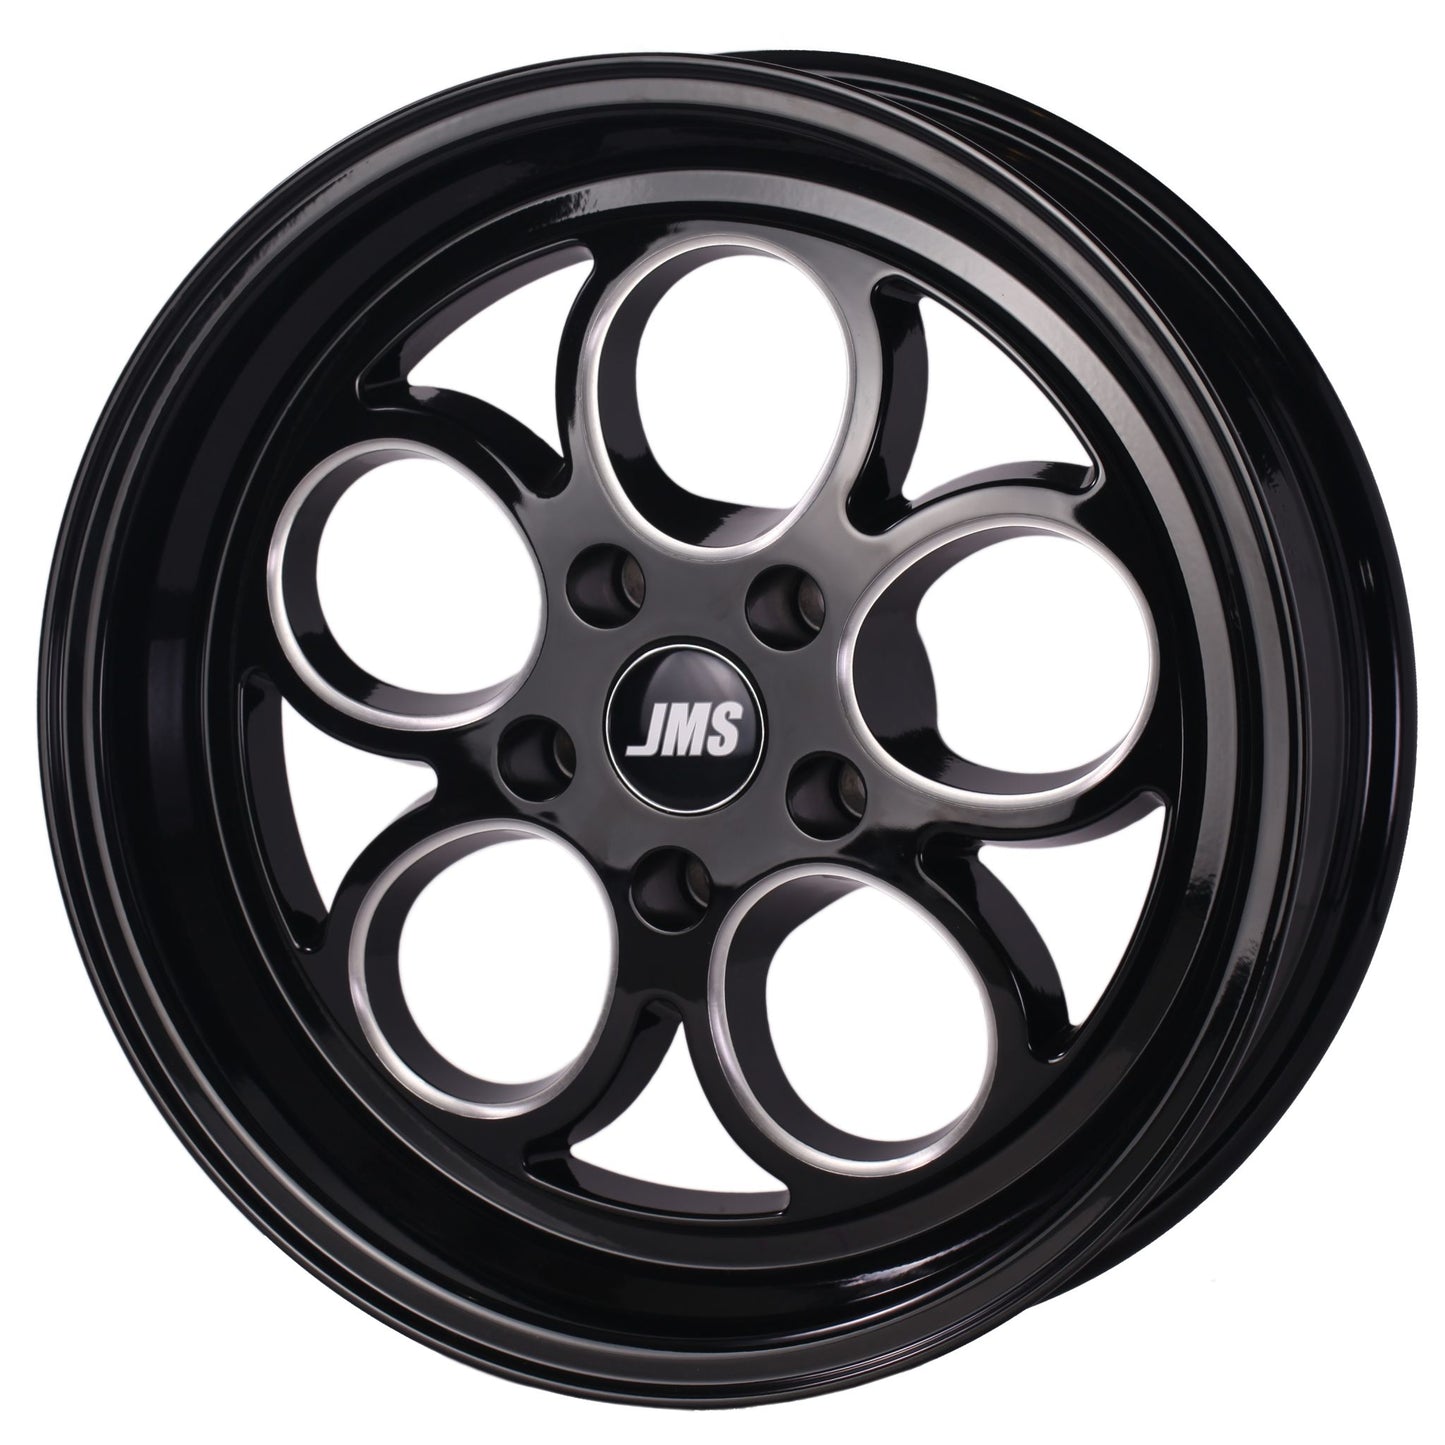 JMS Savage Series Race Wheels - Black Clear w/ Diamond Cut; 17 inch X 4.5 inch Front Wheel w/ Lug Nuts -- Fits 1994-2002 Chevy Camaro and Pontiac Firebird S1745175CB